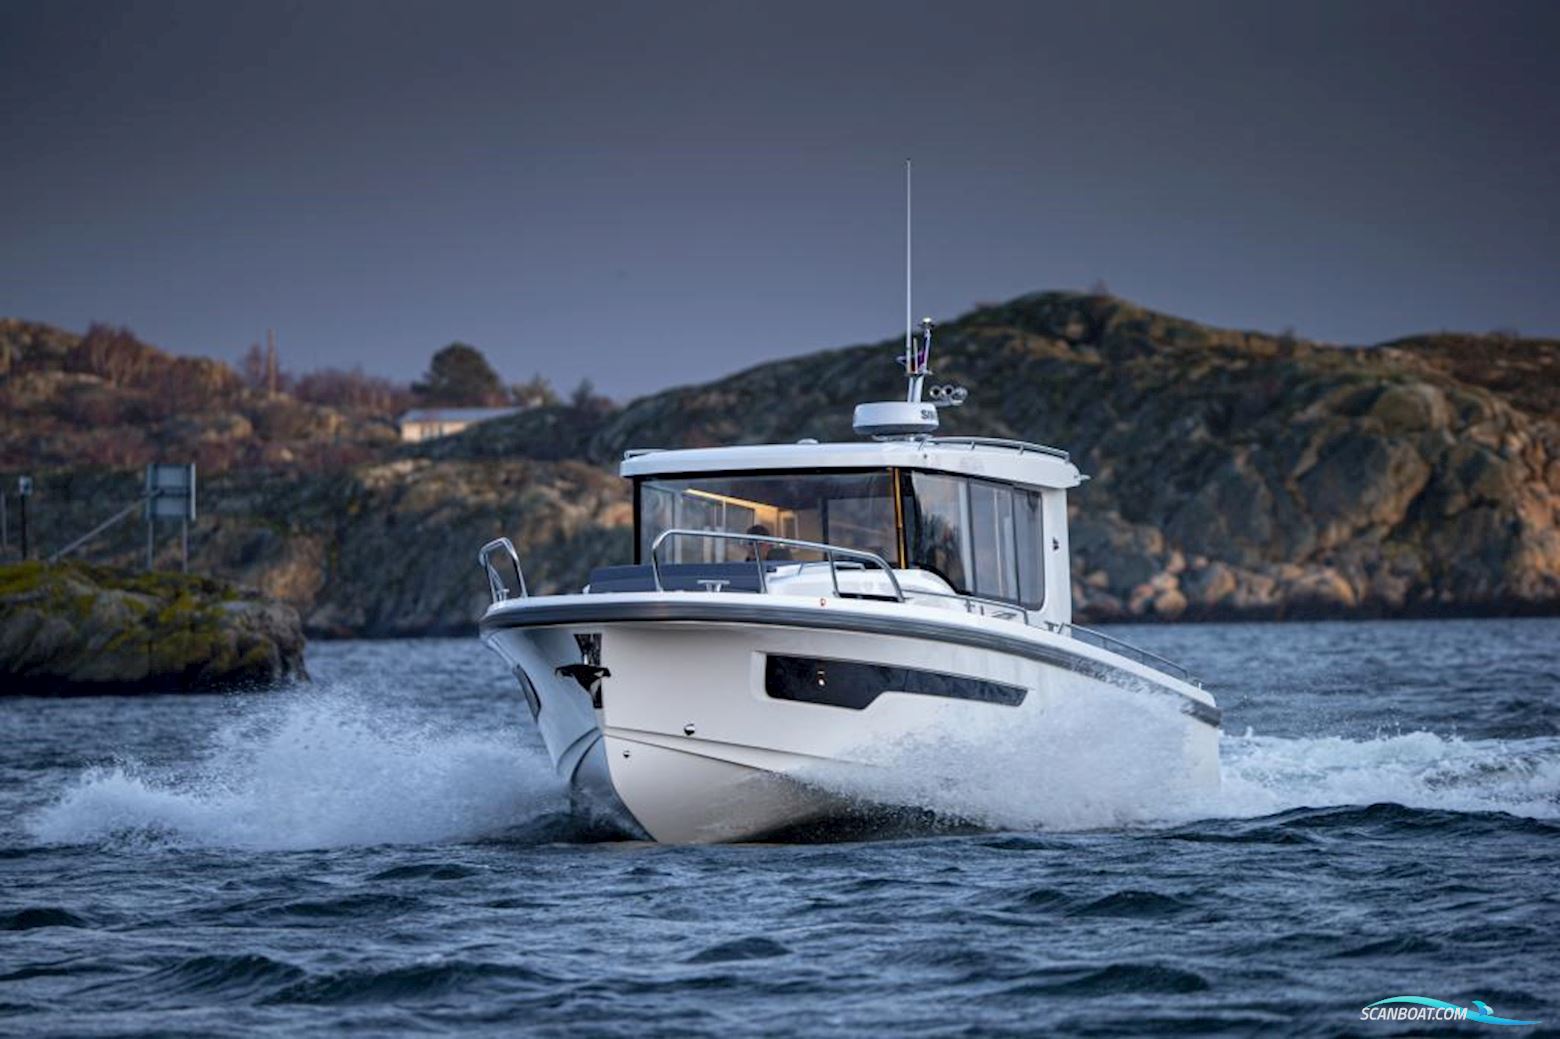 Nimbus C11 Motor boat 2024, with Mercury engine, Sweden